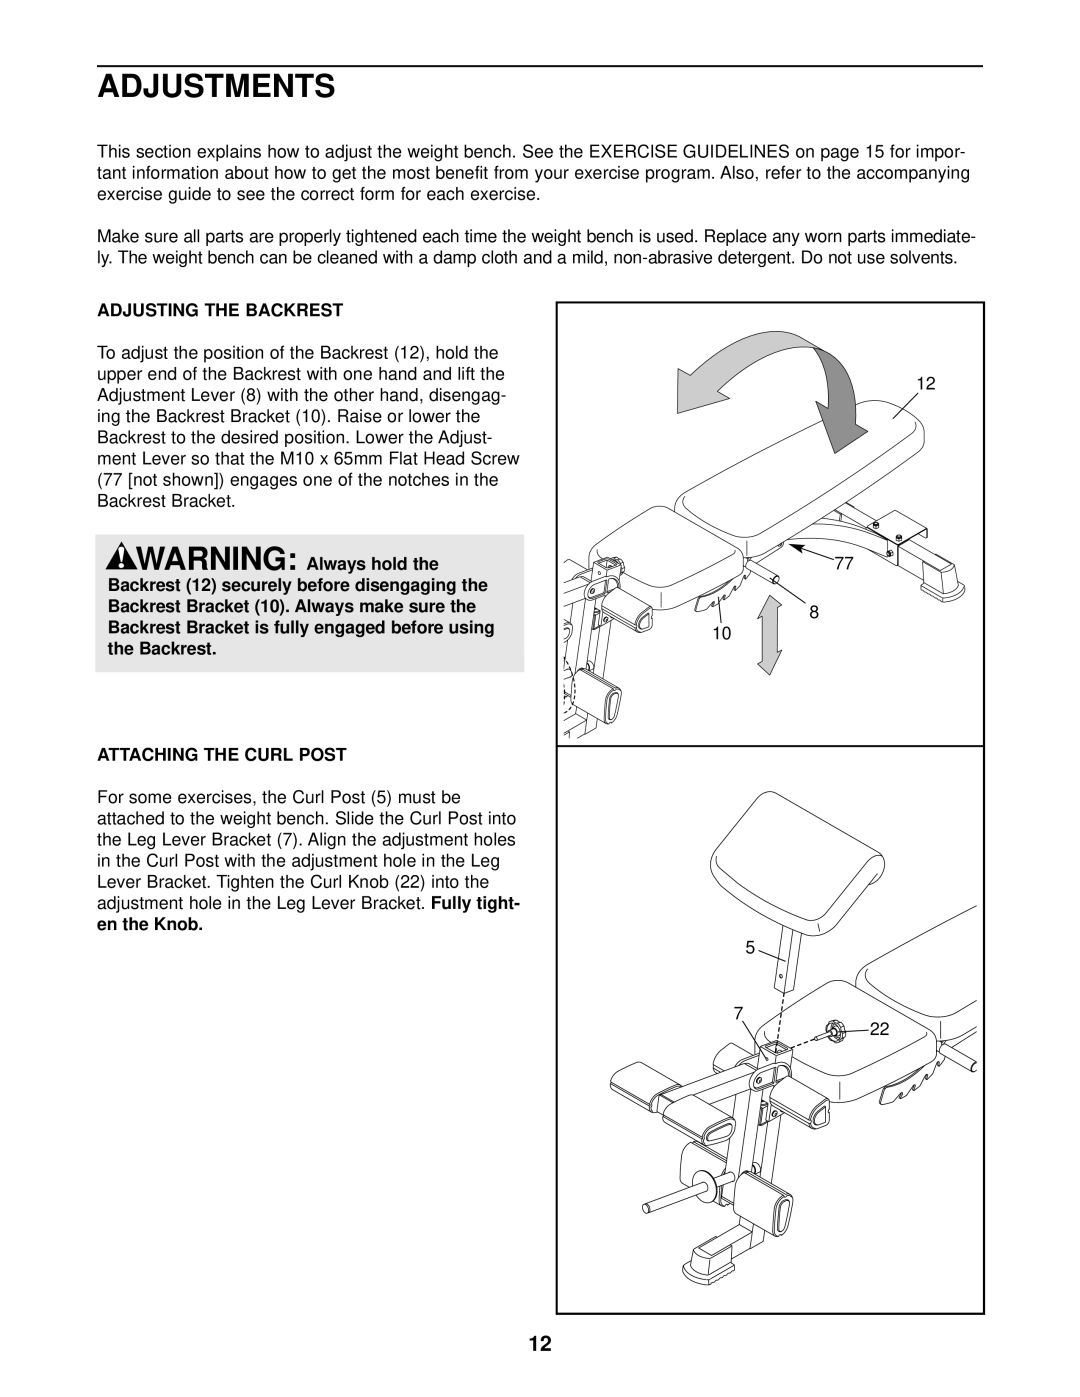 ProForm 831.150330, C800 user manual Adjustments, Adjusting The Backrest, Attaching The Curl Post 